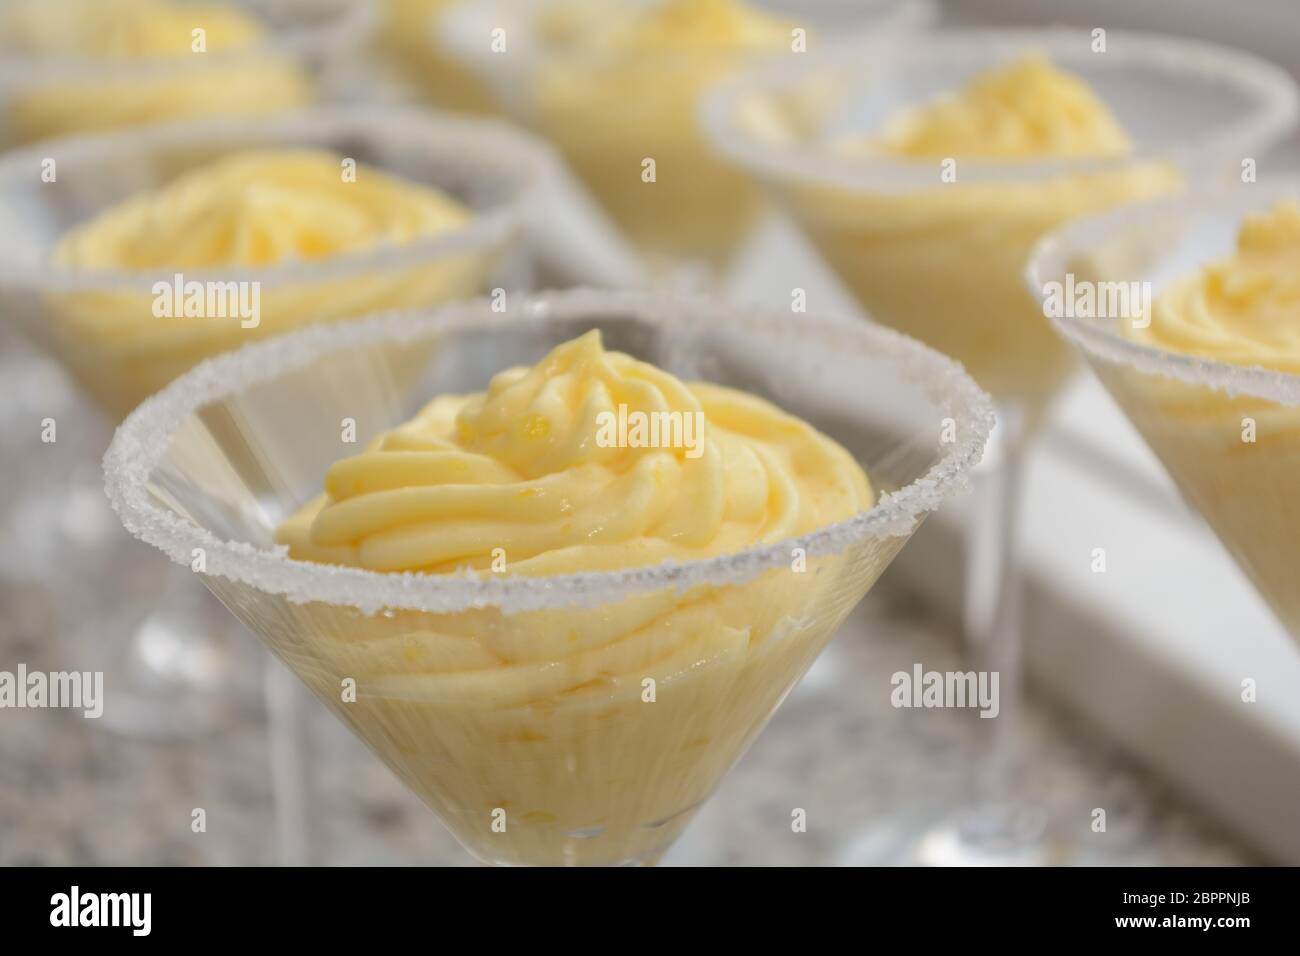 Delicious and tasty vanilla sauce in dessert glasses with sugar rim - depth of field Stock Photo